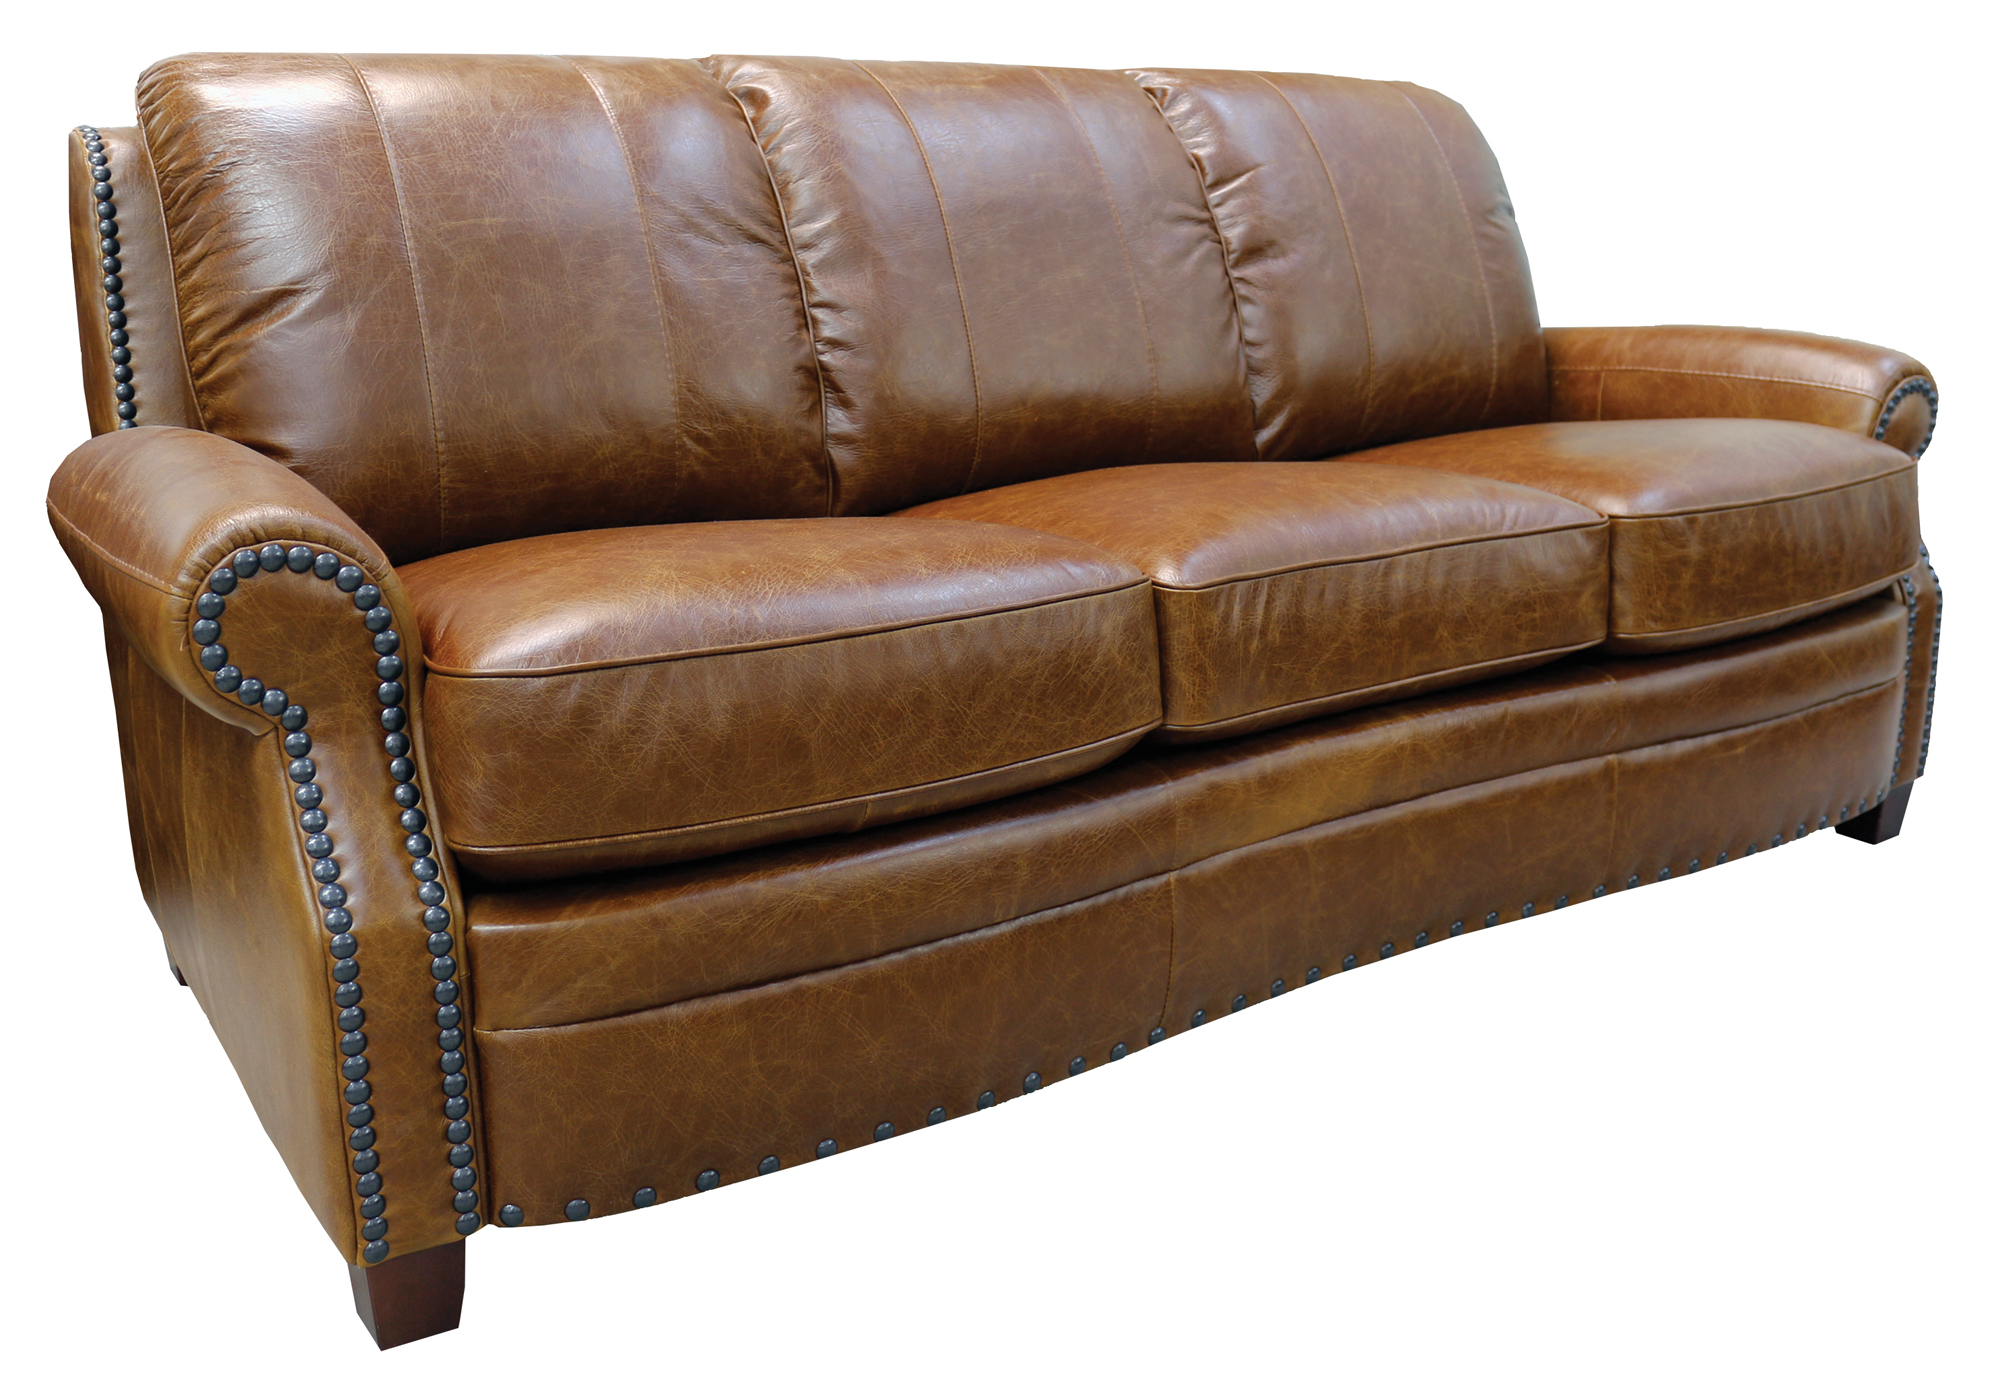 New Luke Leather Furniture "Ashton" Tan Leather Collection